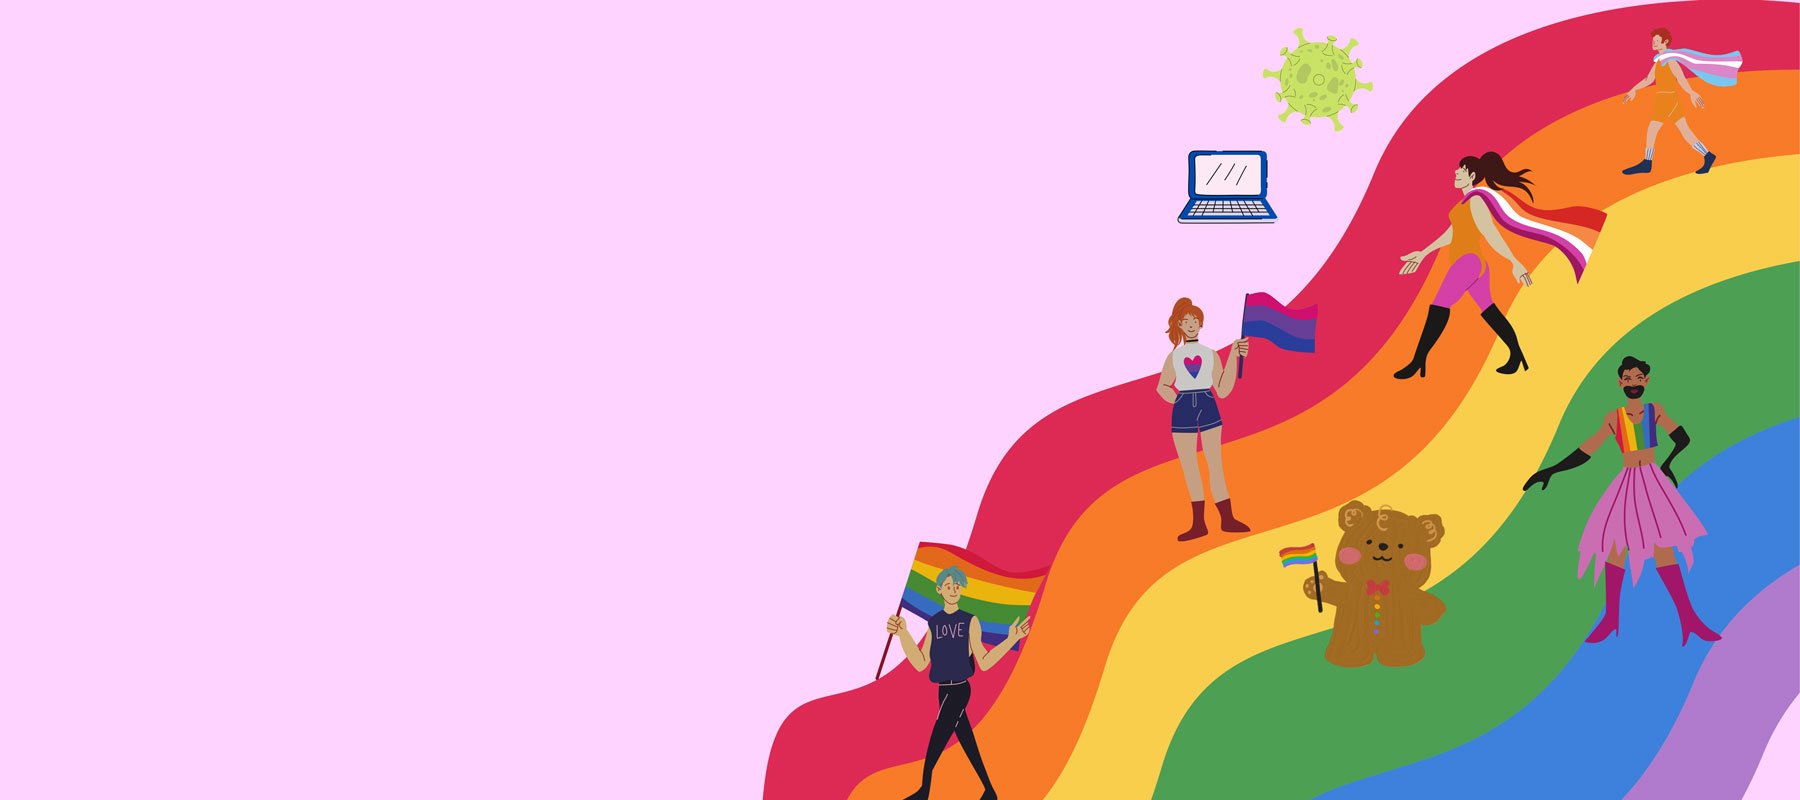 How Should Brands Prepare for Pride 2022?